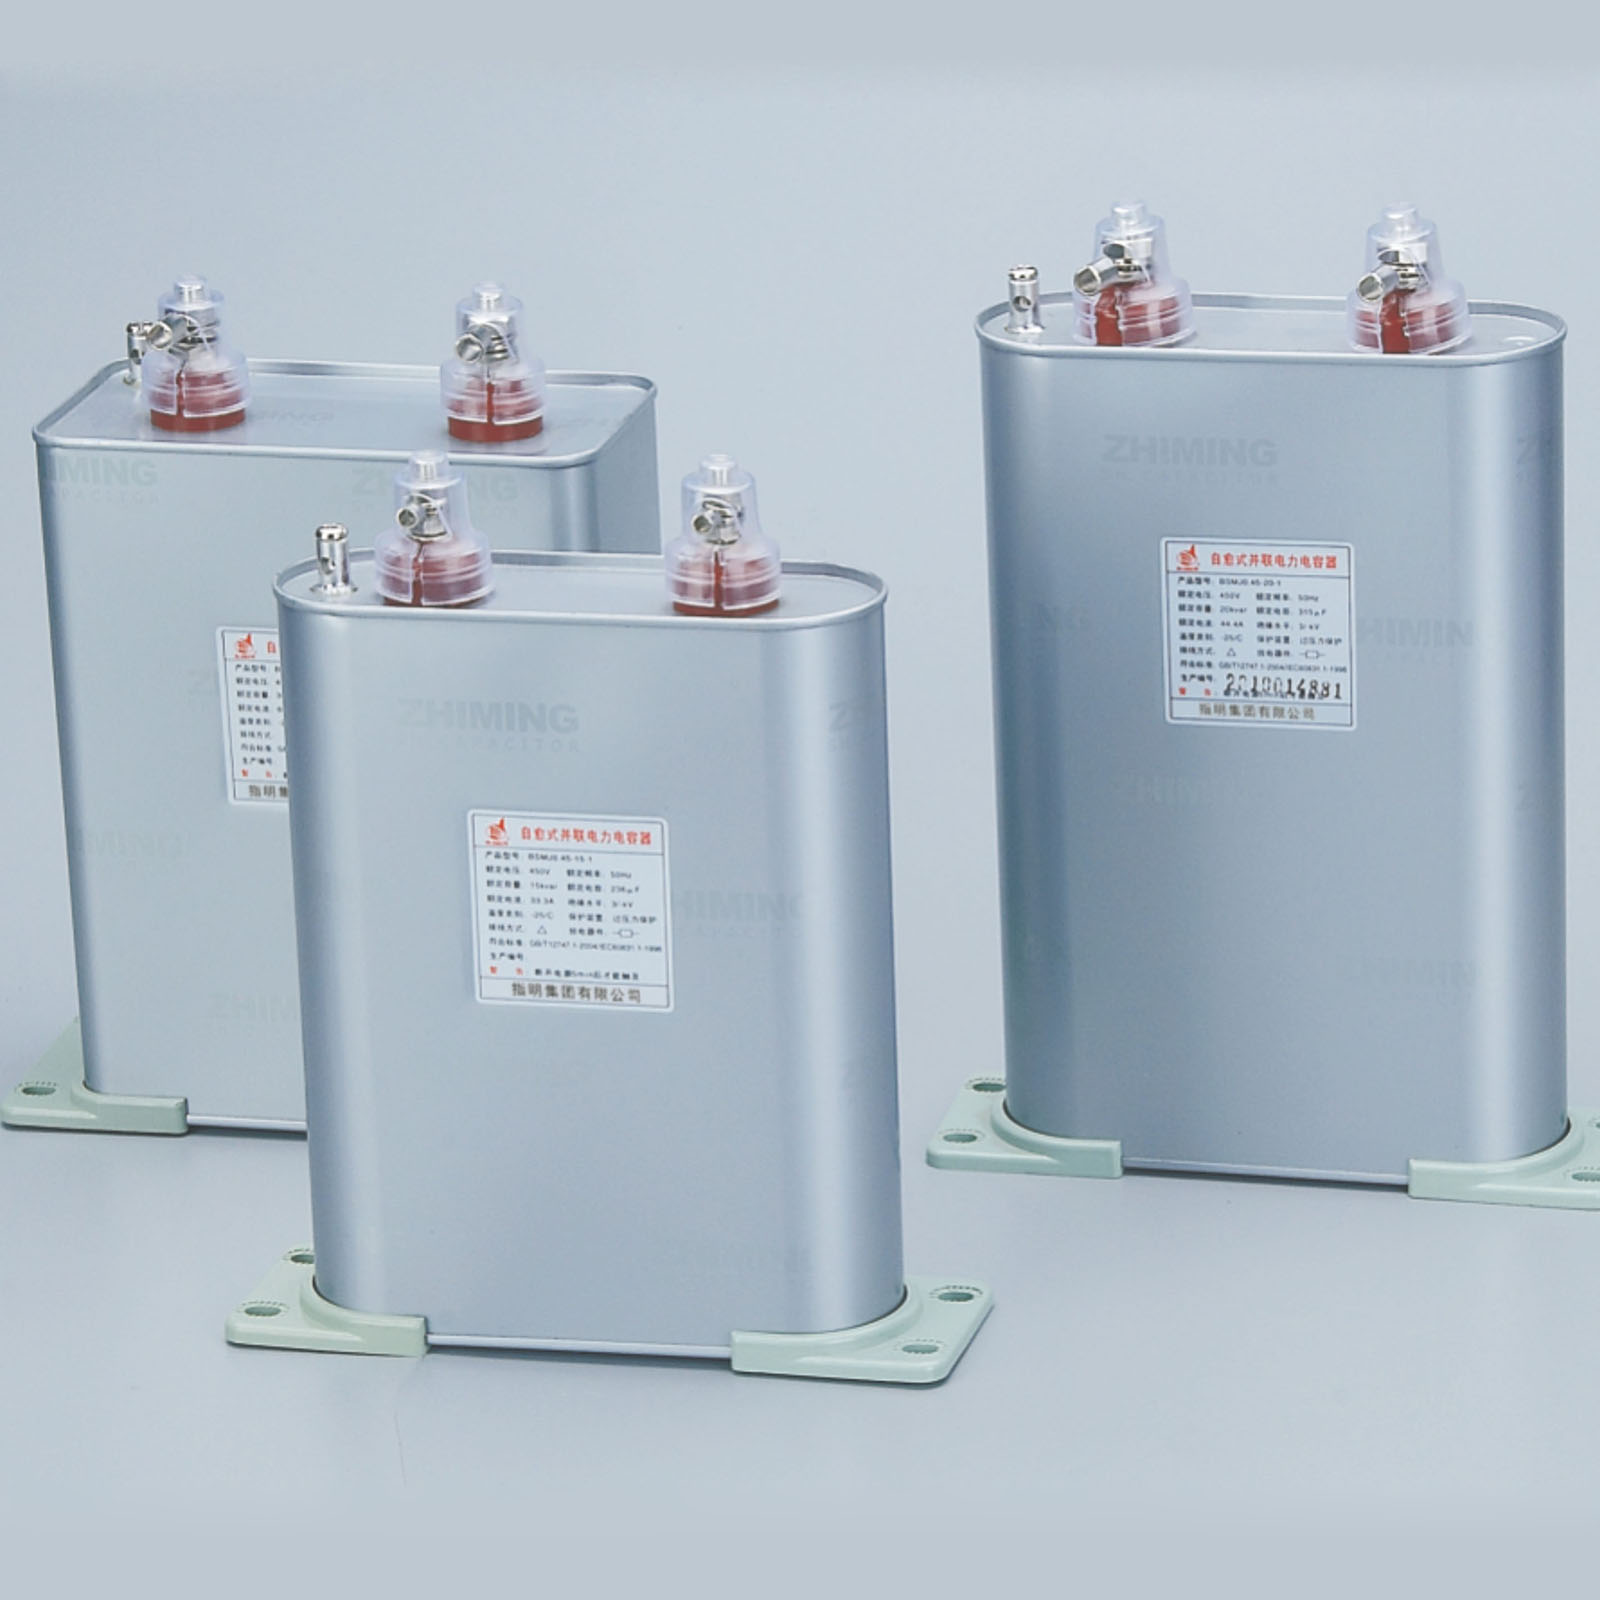 BSMJ自愈式低压并联电容器(单相、矿热炉专用系列)